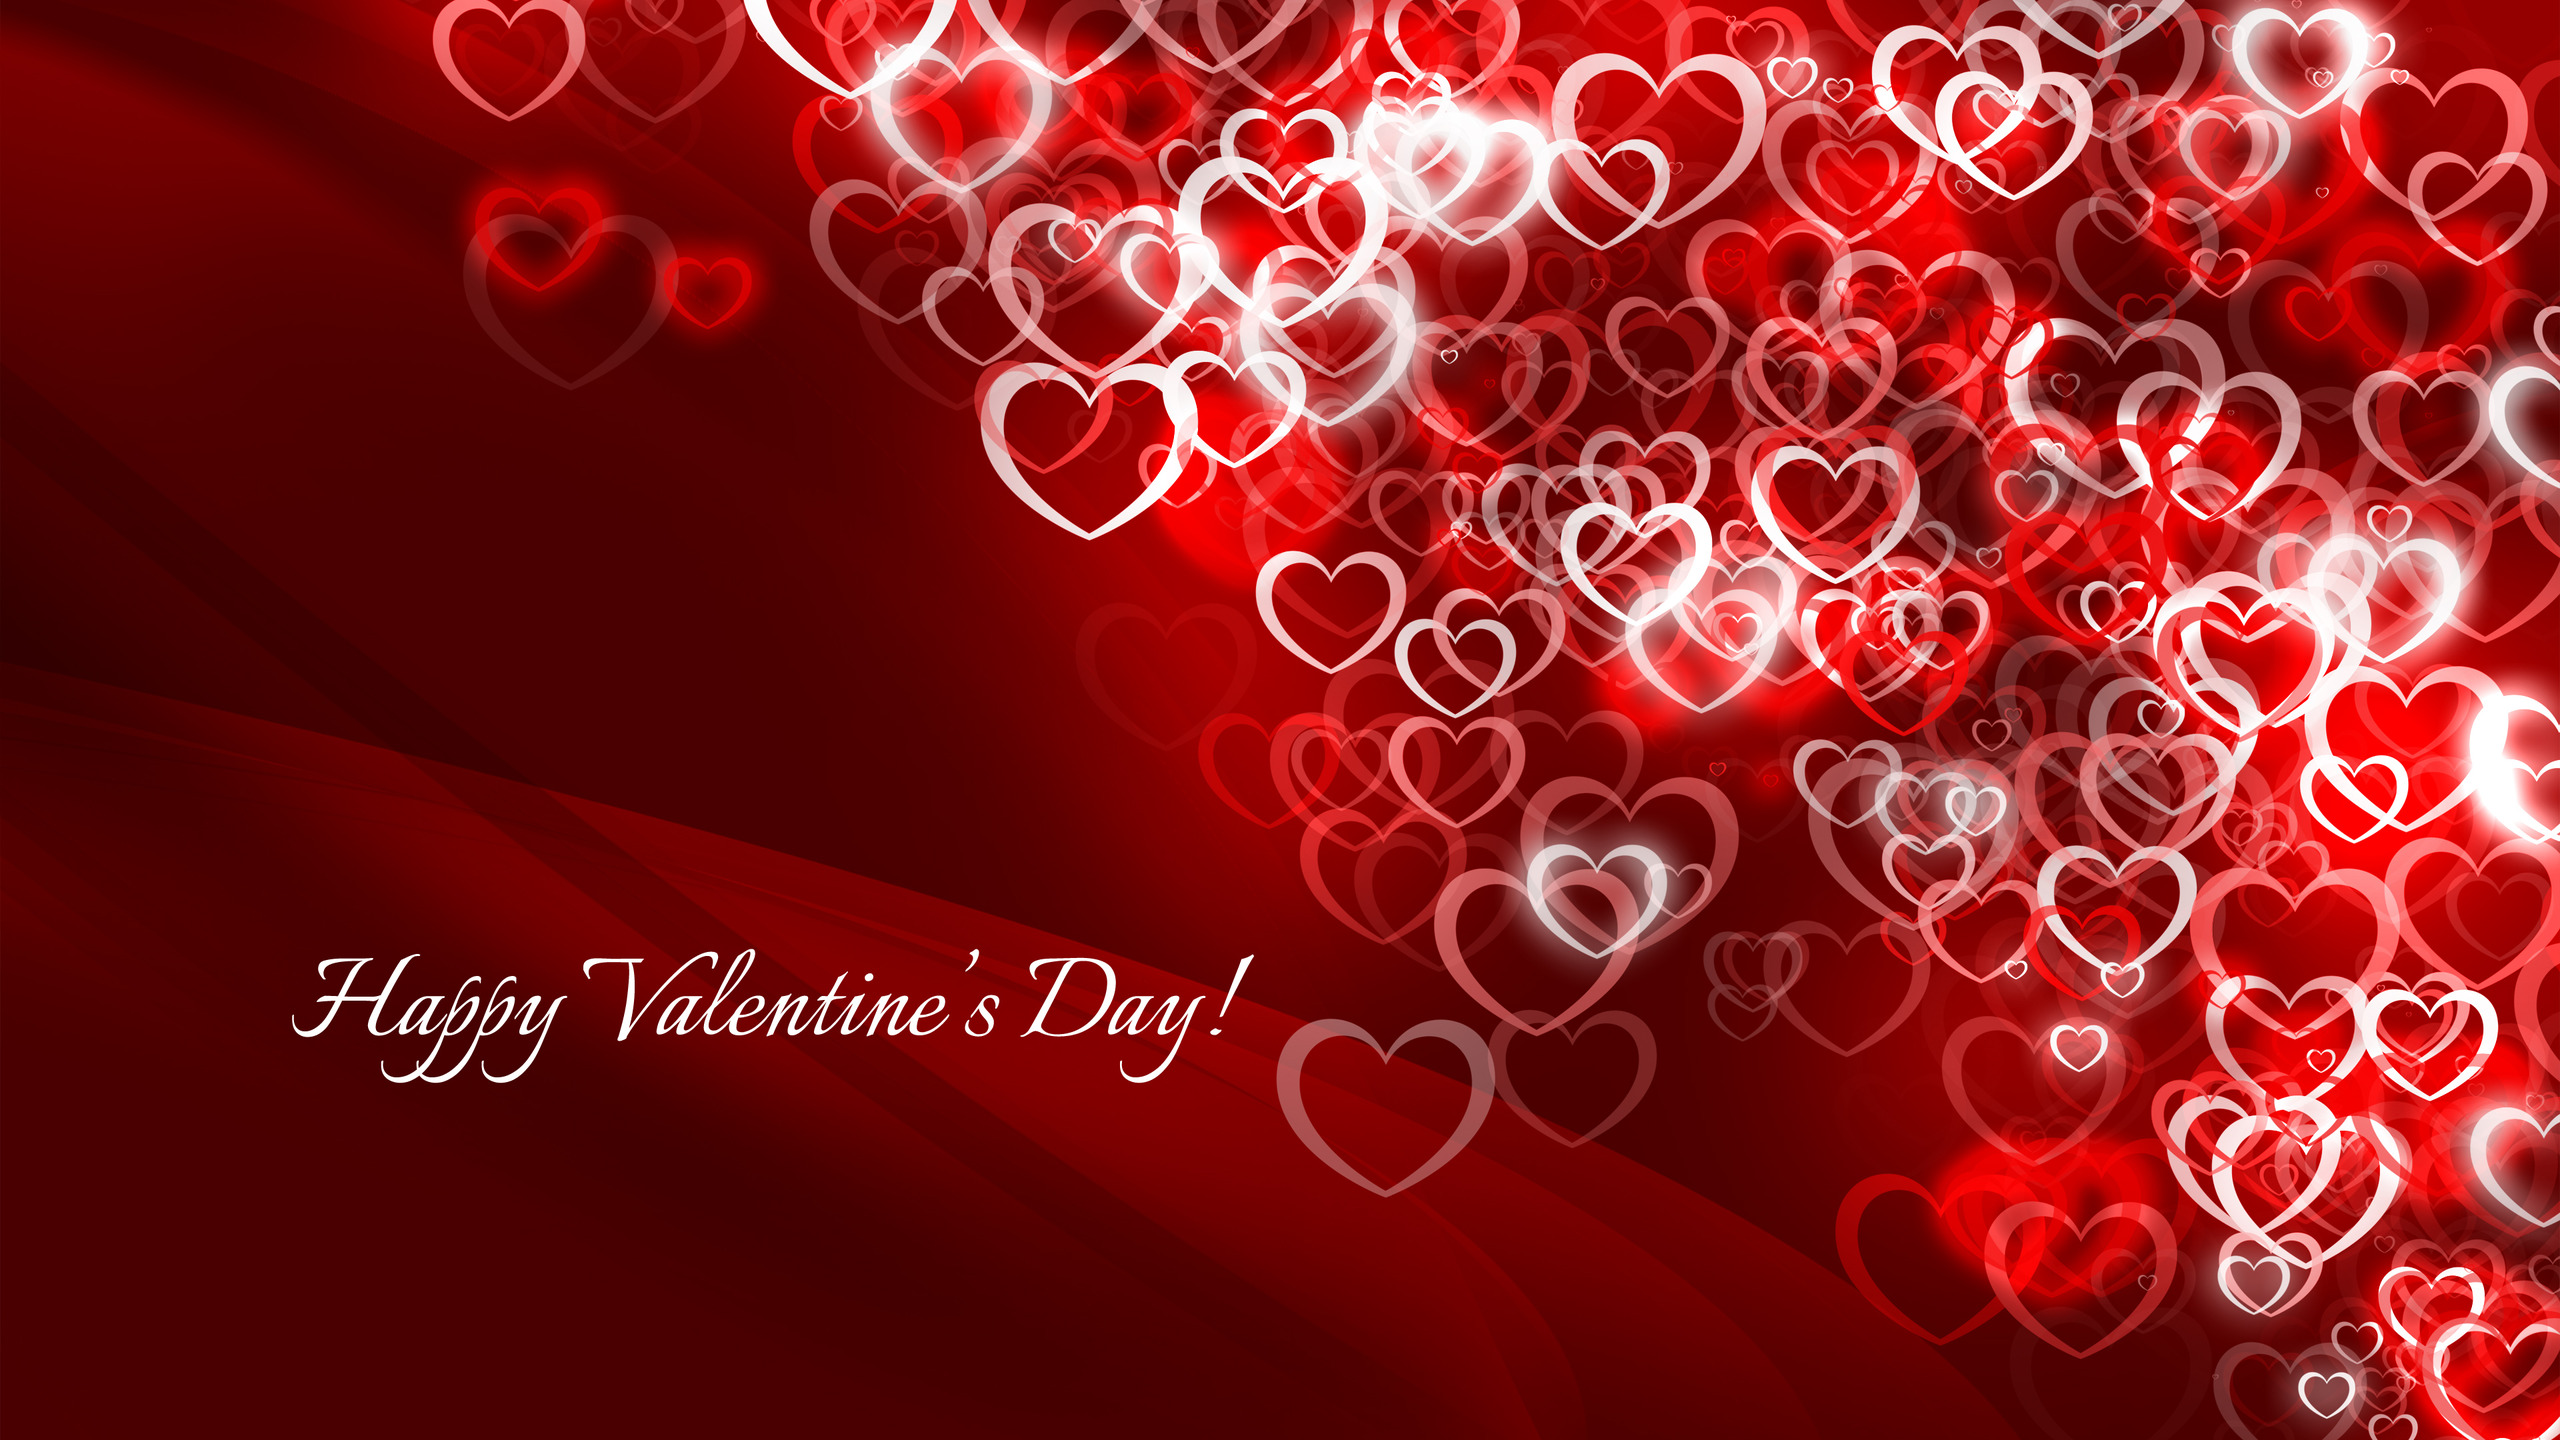 3d valentine's day wallpaper - Google Search | Happy valentines day  pictures, Happy valentines day images, Valentines day pictures